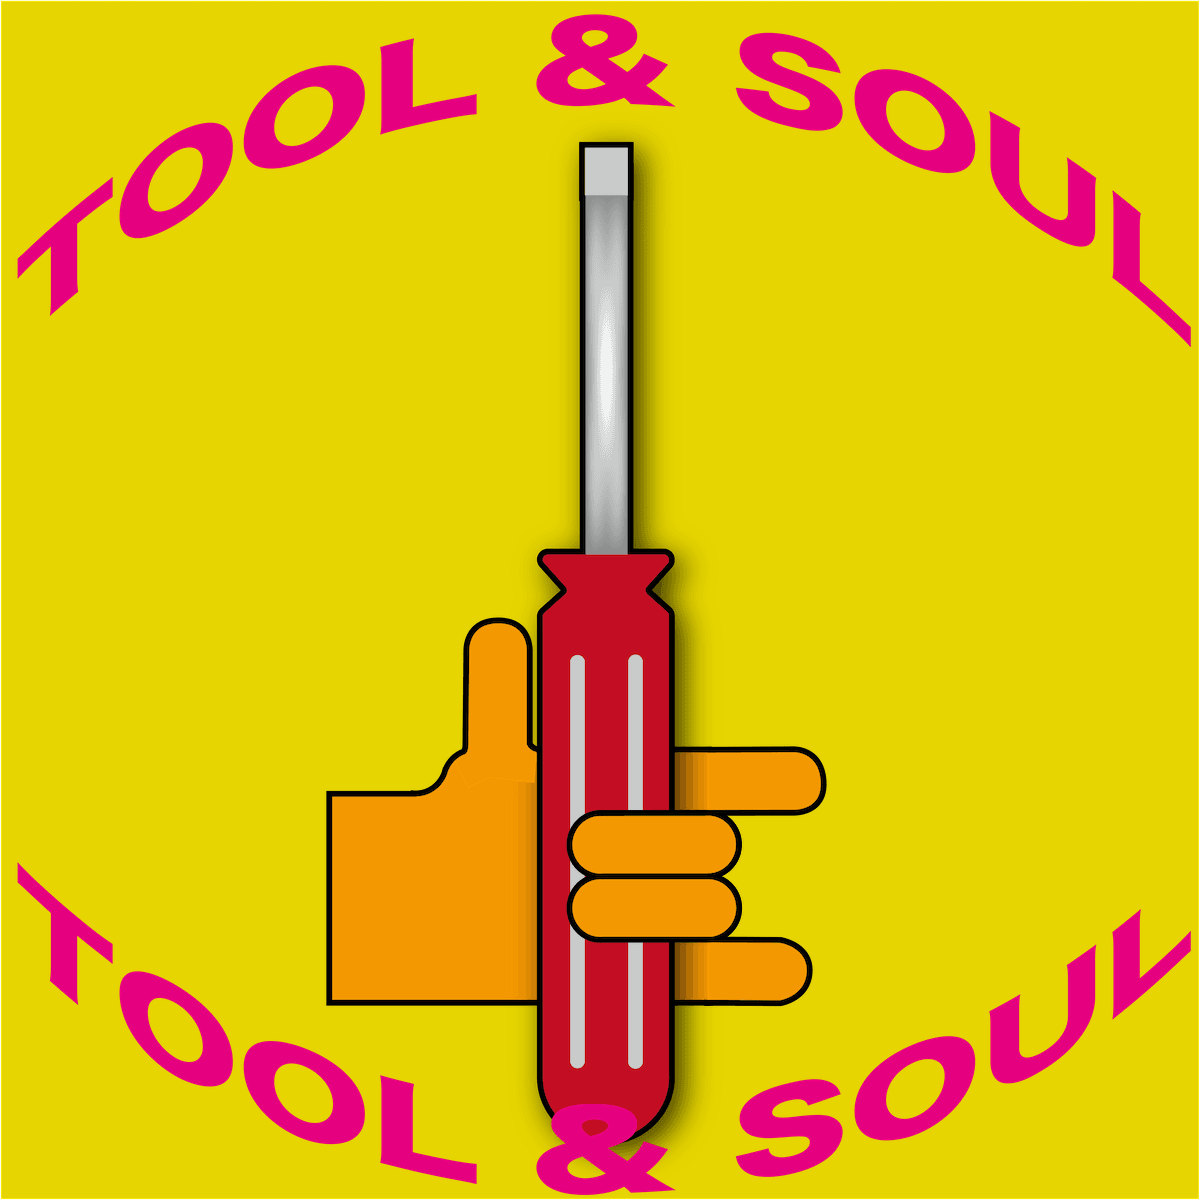 Tool&Soul #34